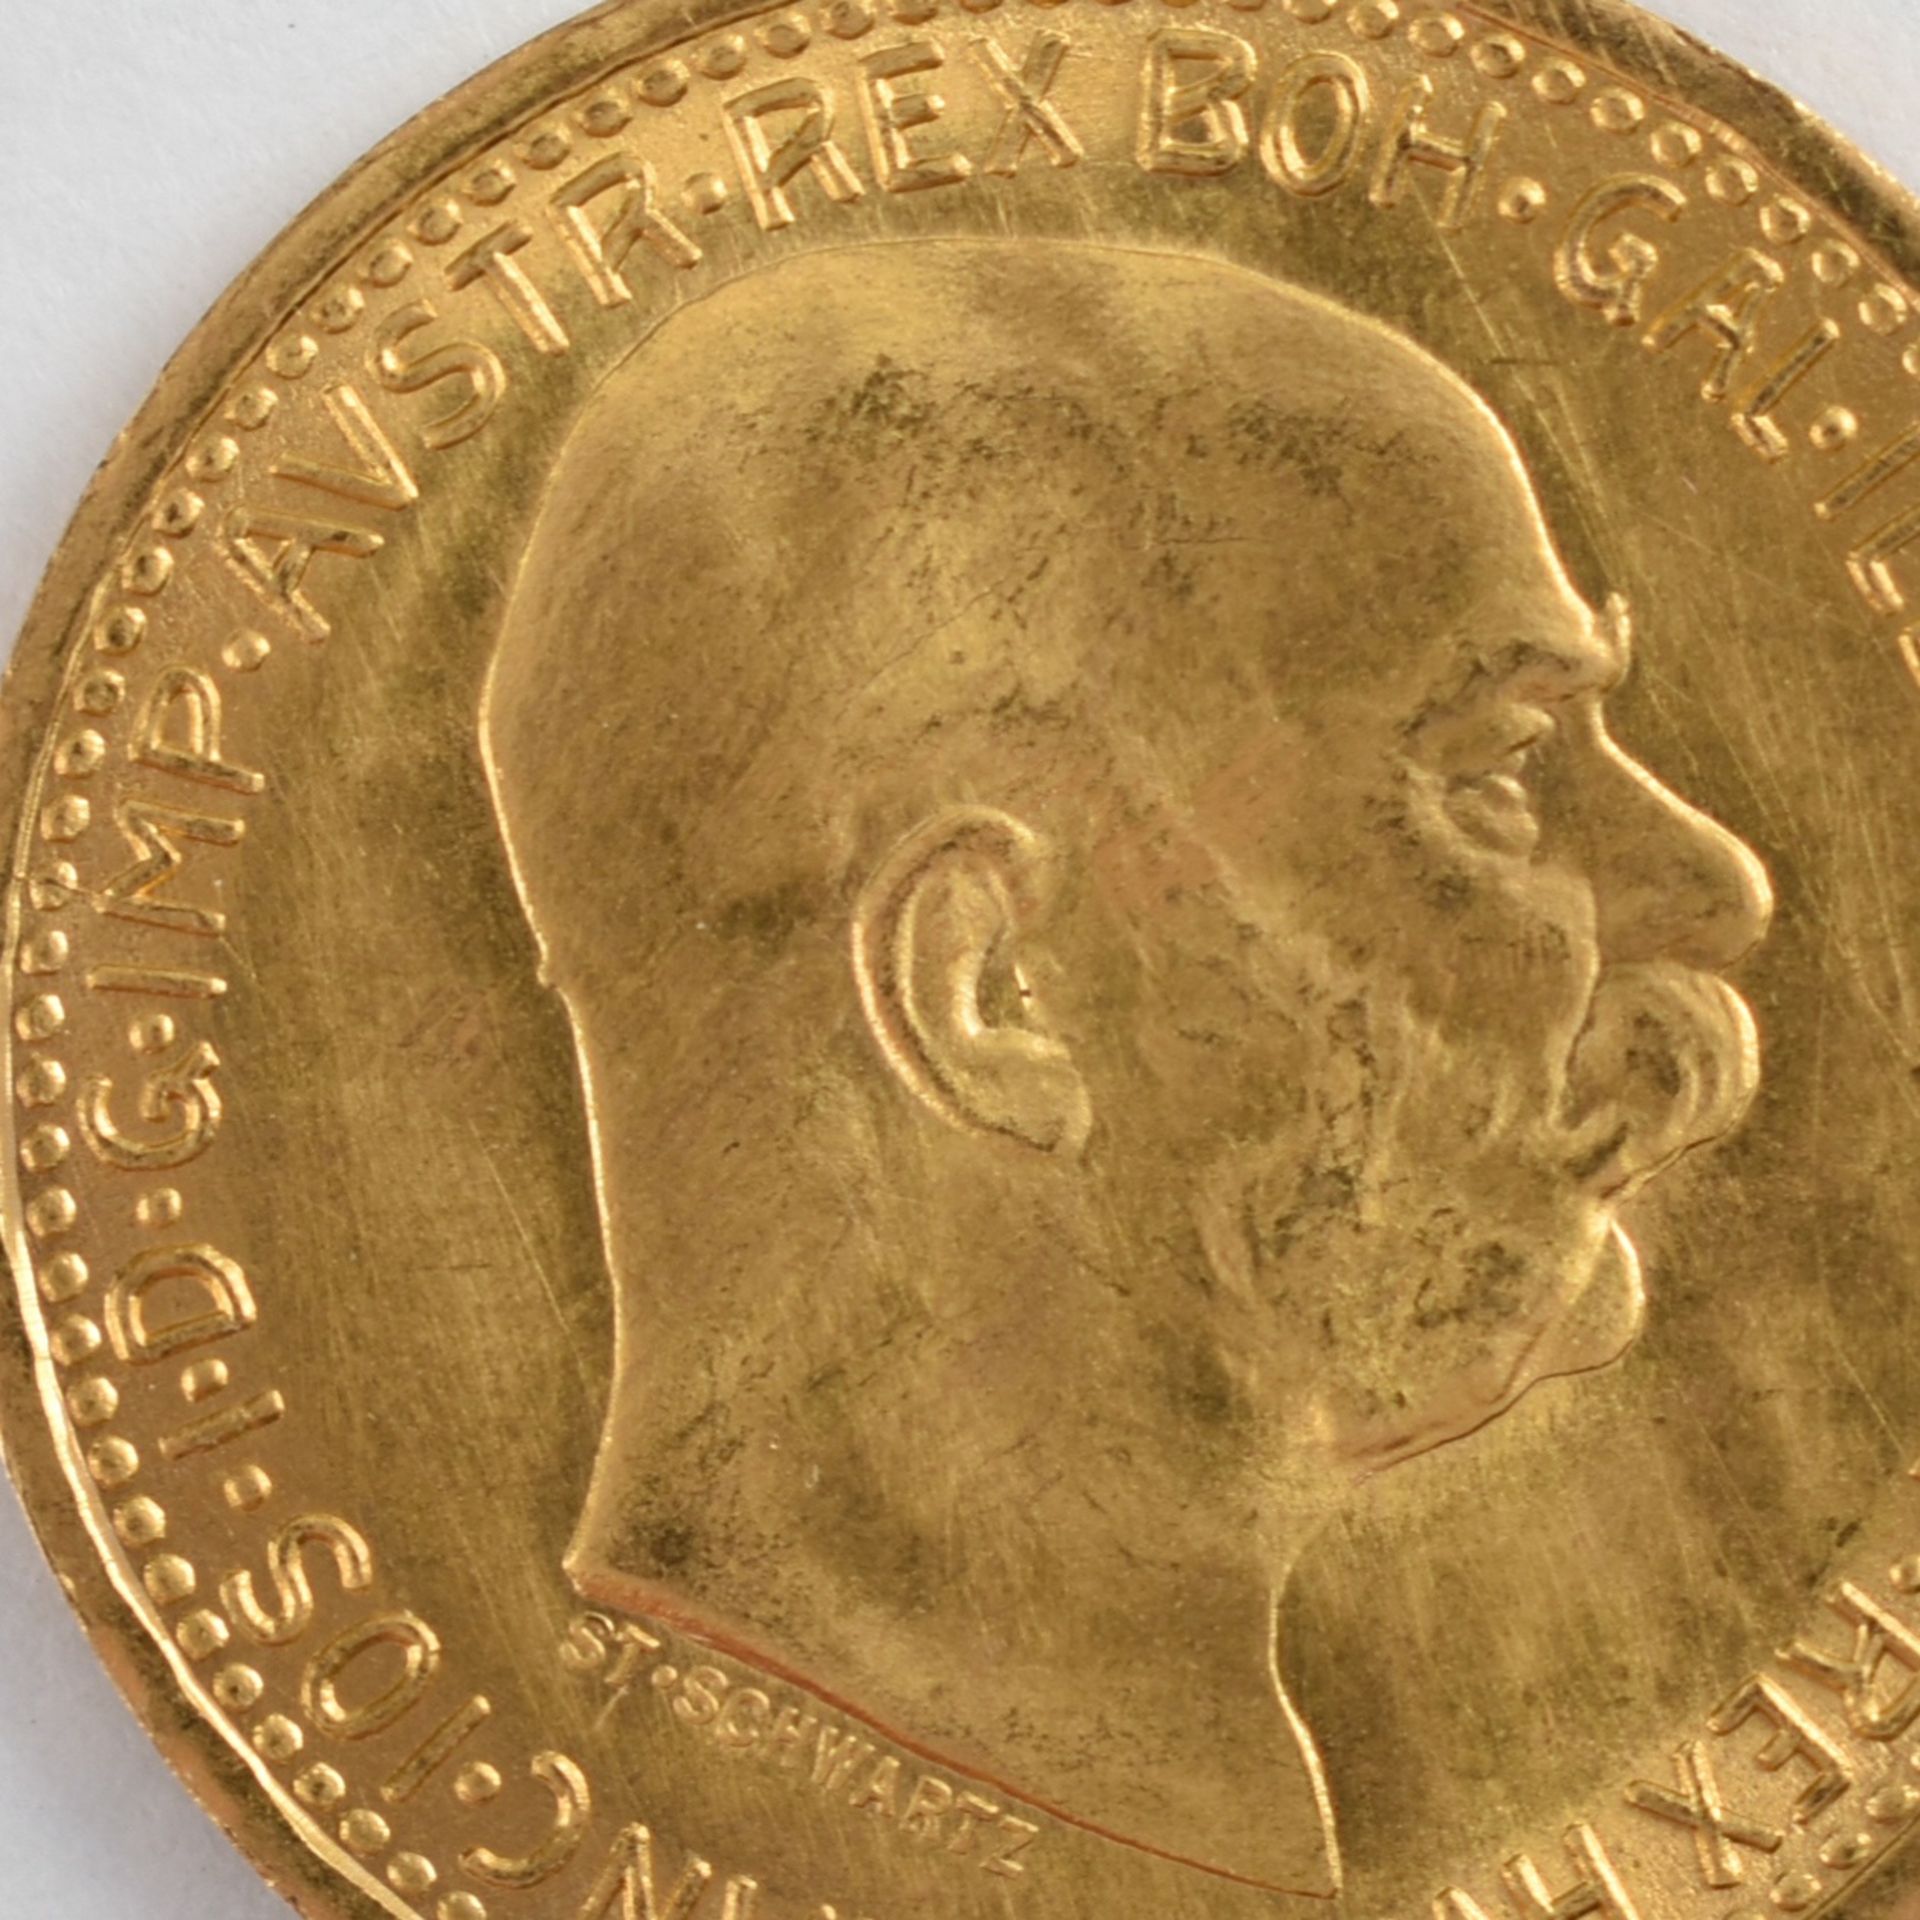 Goldmünze Österreich - Kaiserzeit 1912 10 Kronen in Gold, 900/1000, 3,387 g, D ca. 19 mm, av. Kaiser